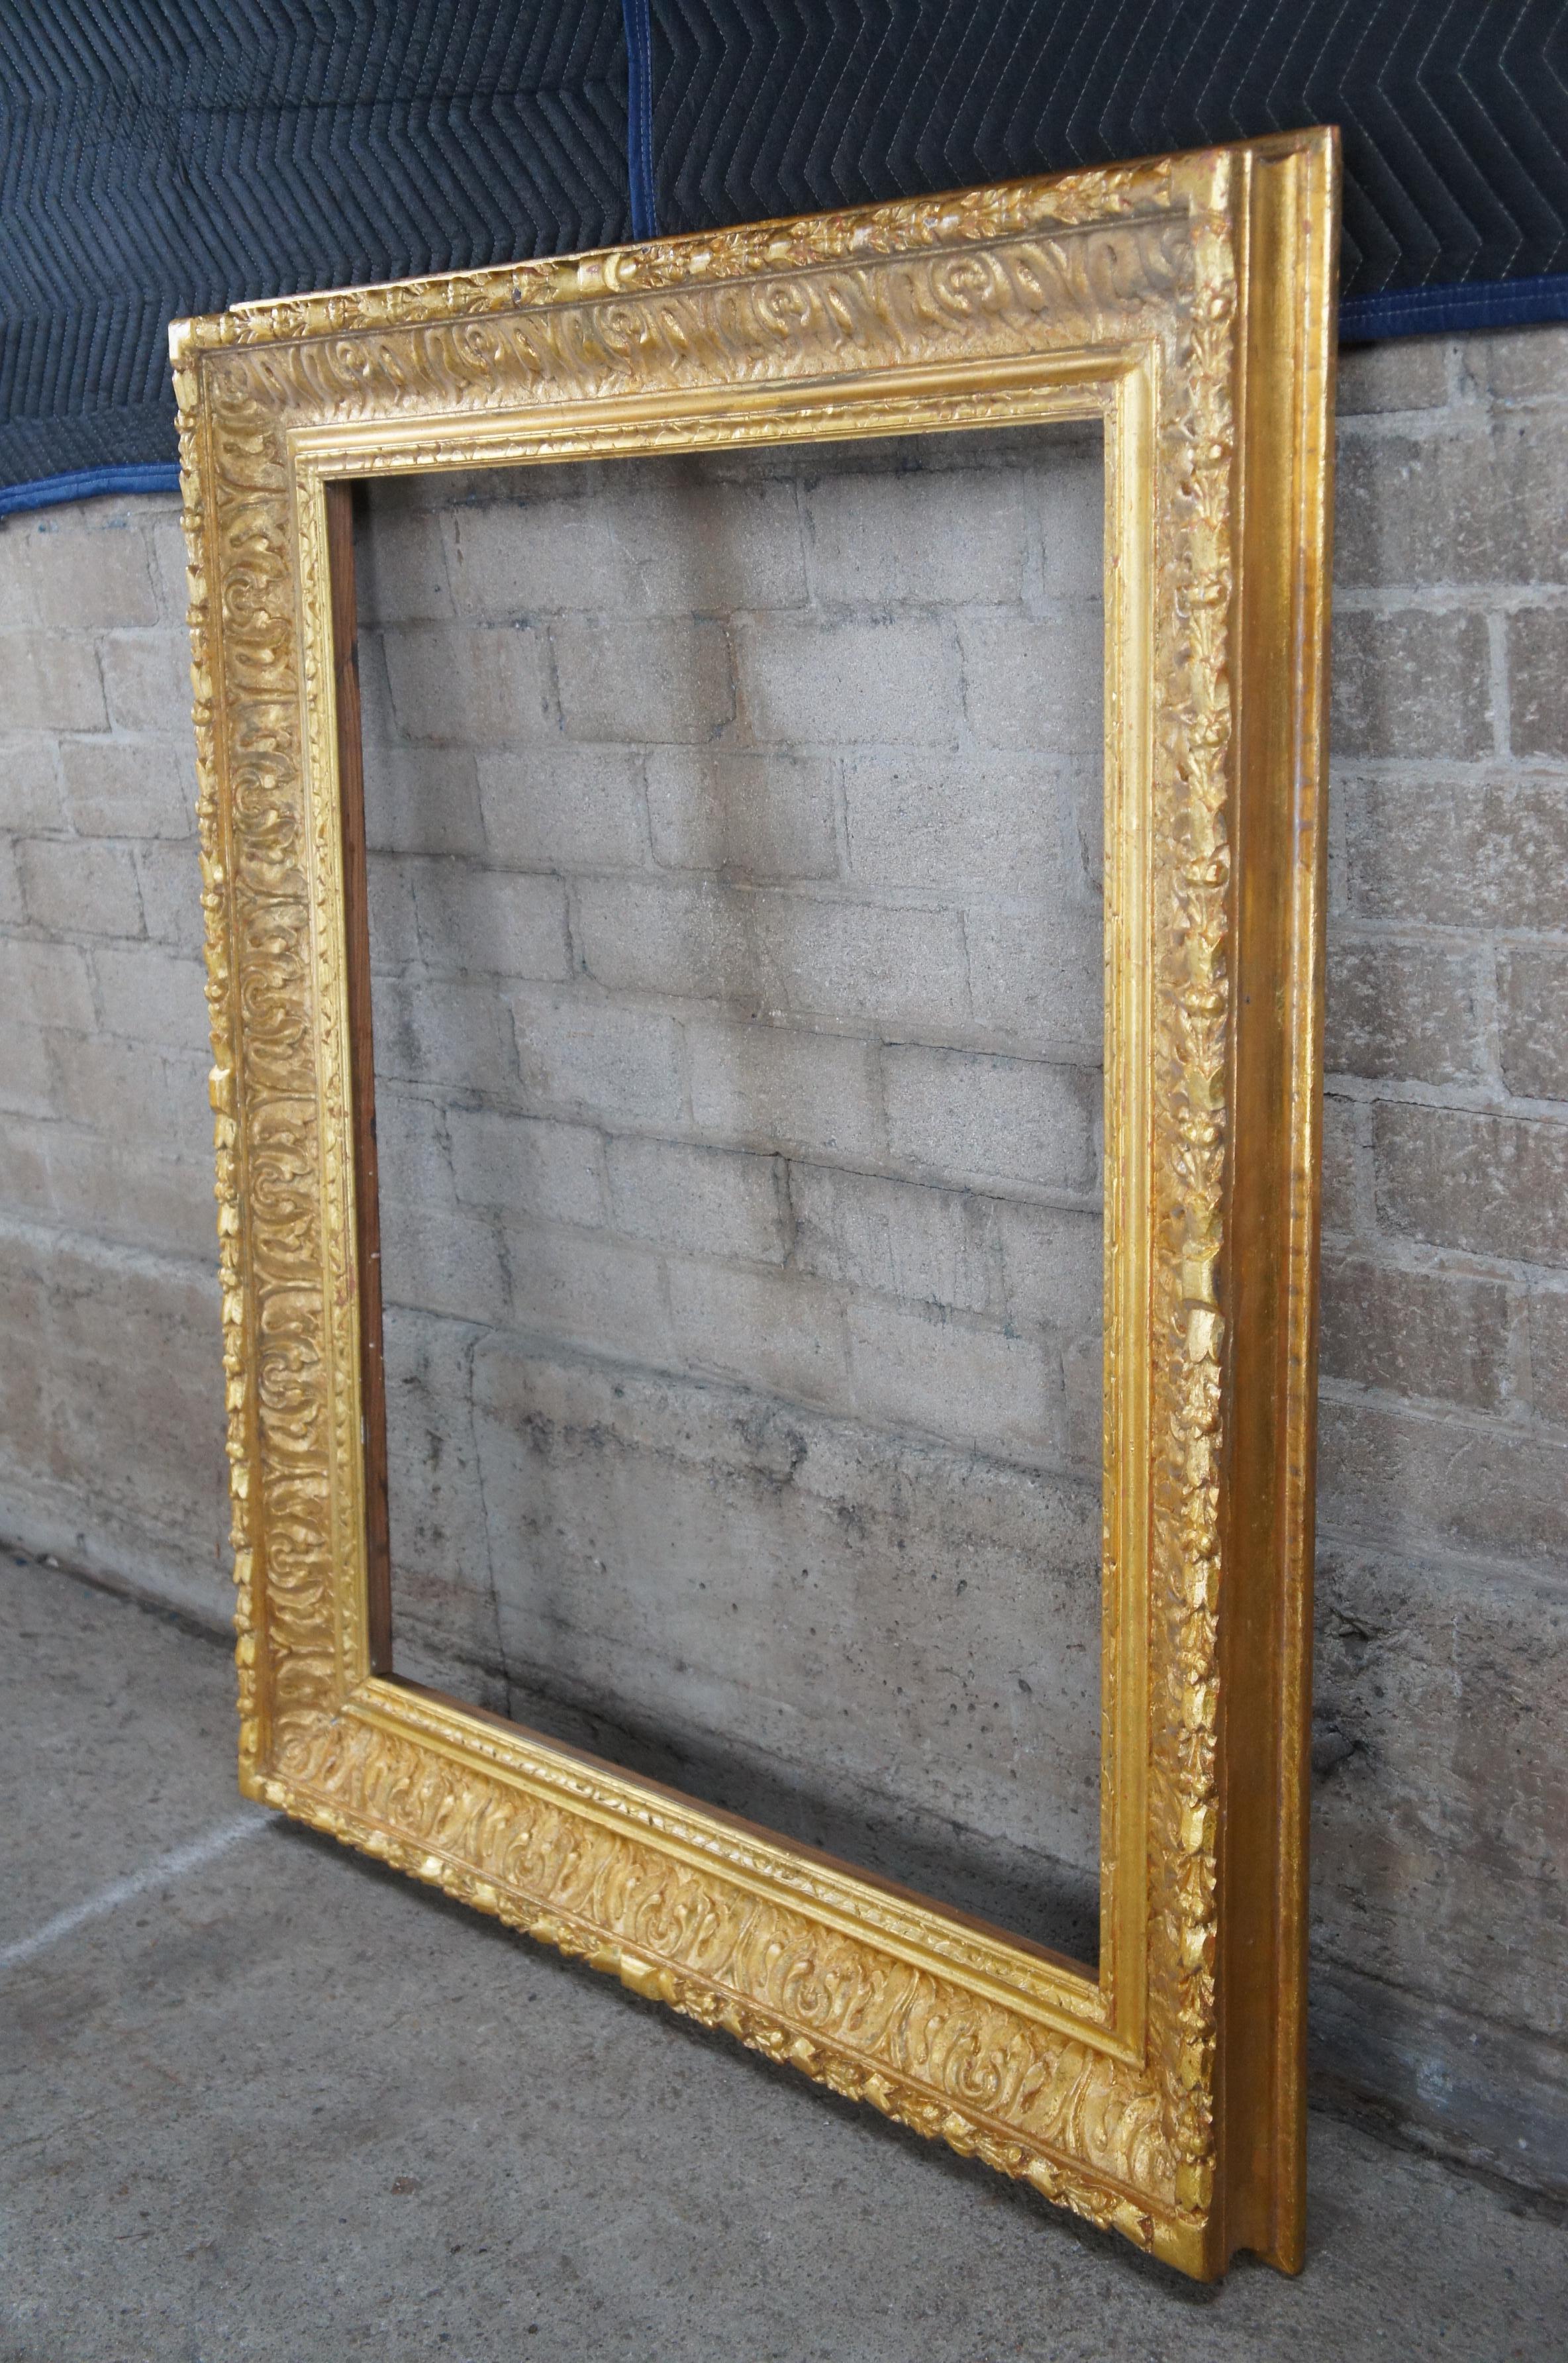 Giltwood Large Impressive Antique Carved Gold Gilded Picture Art Mirror Frame 53